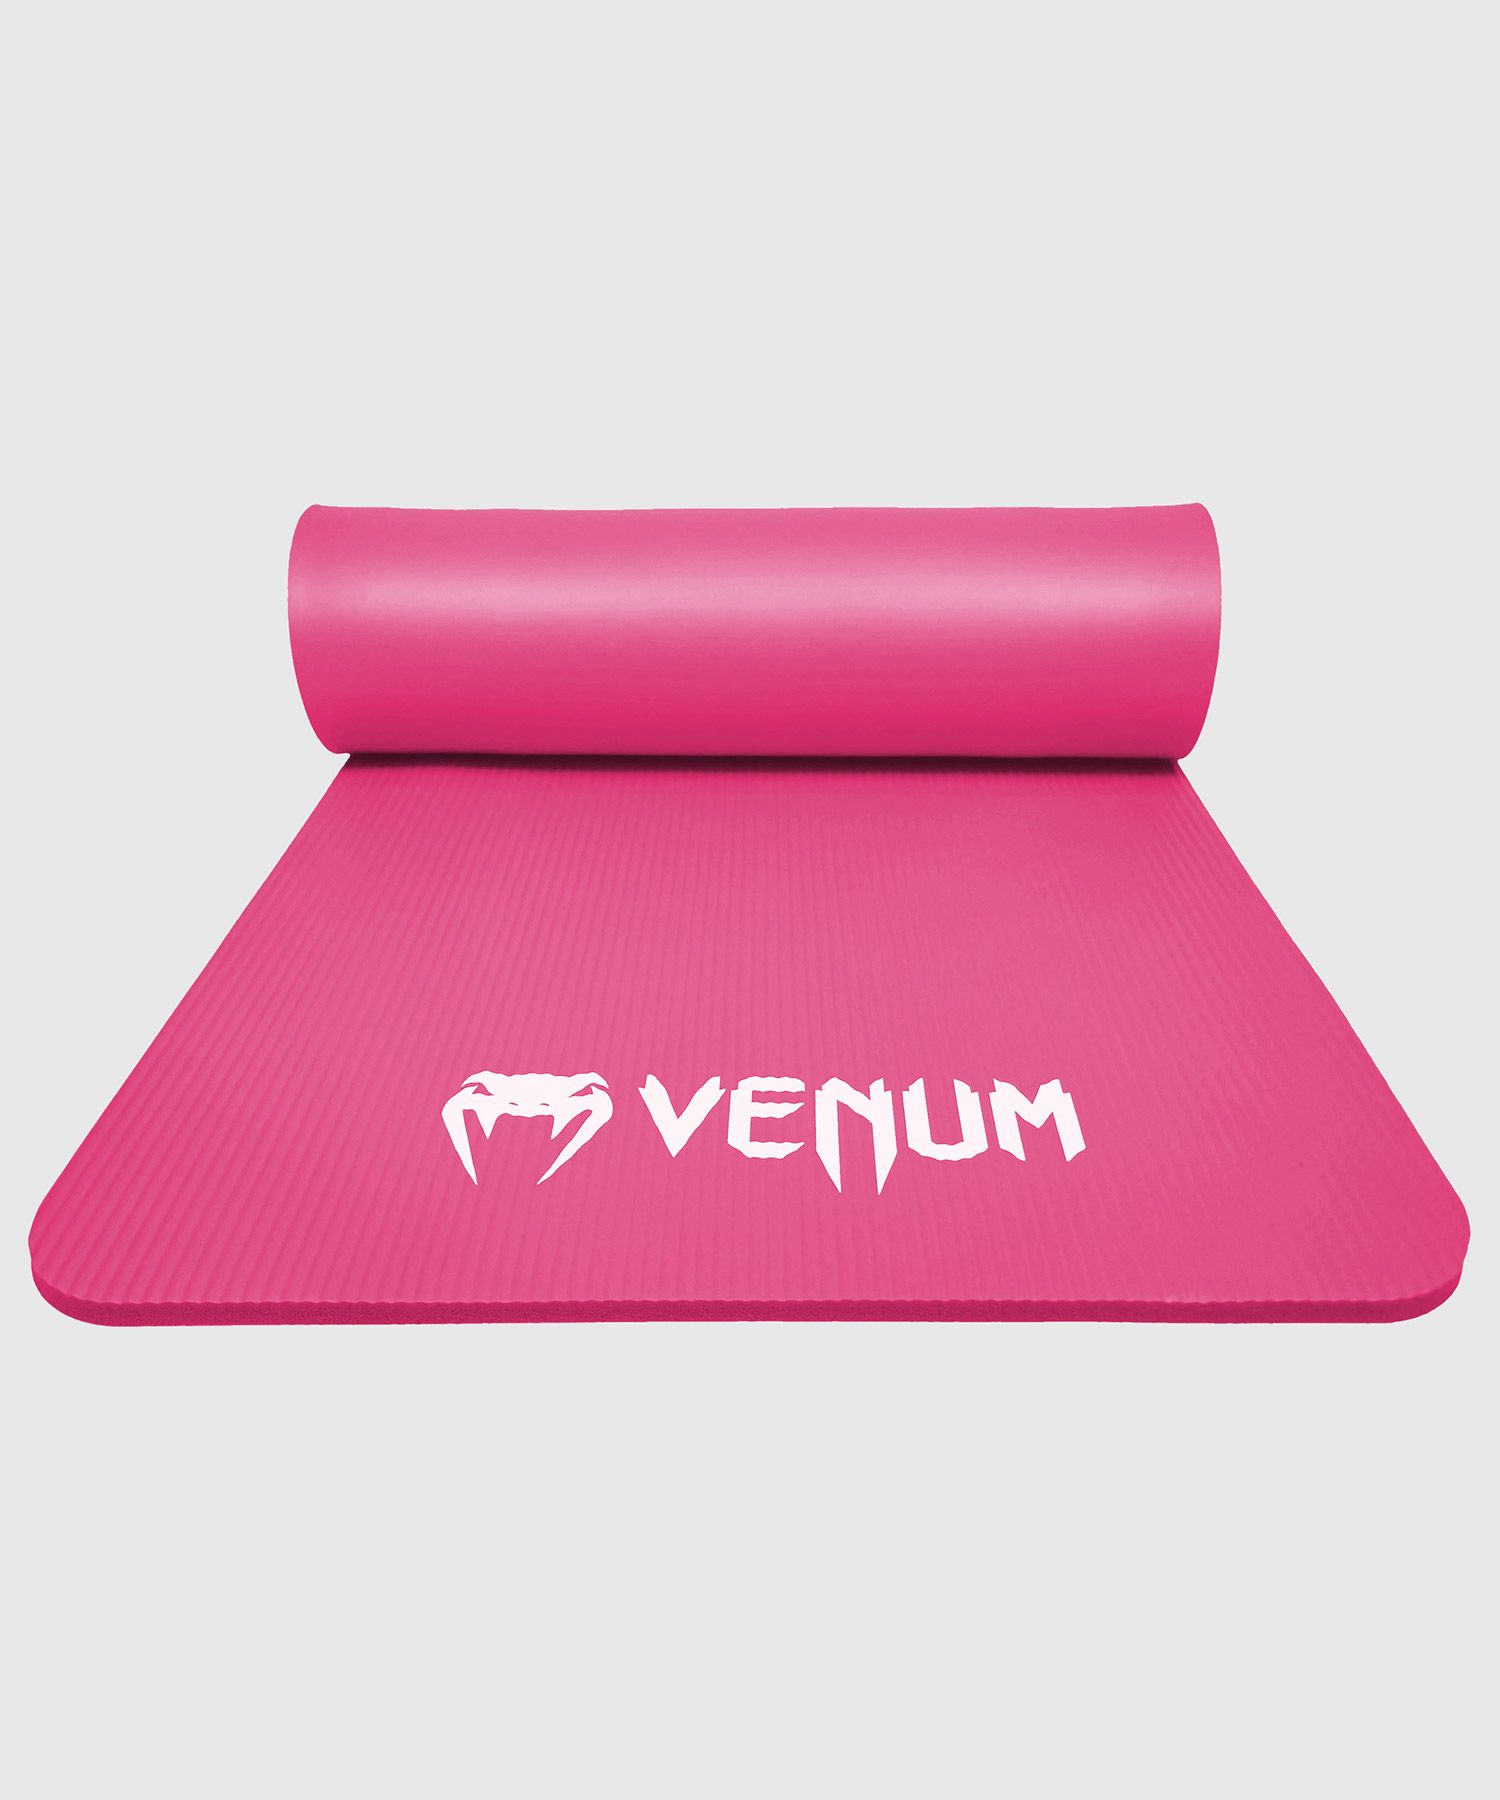 Venum Laser Yogamatte - Rosa